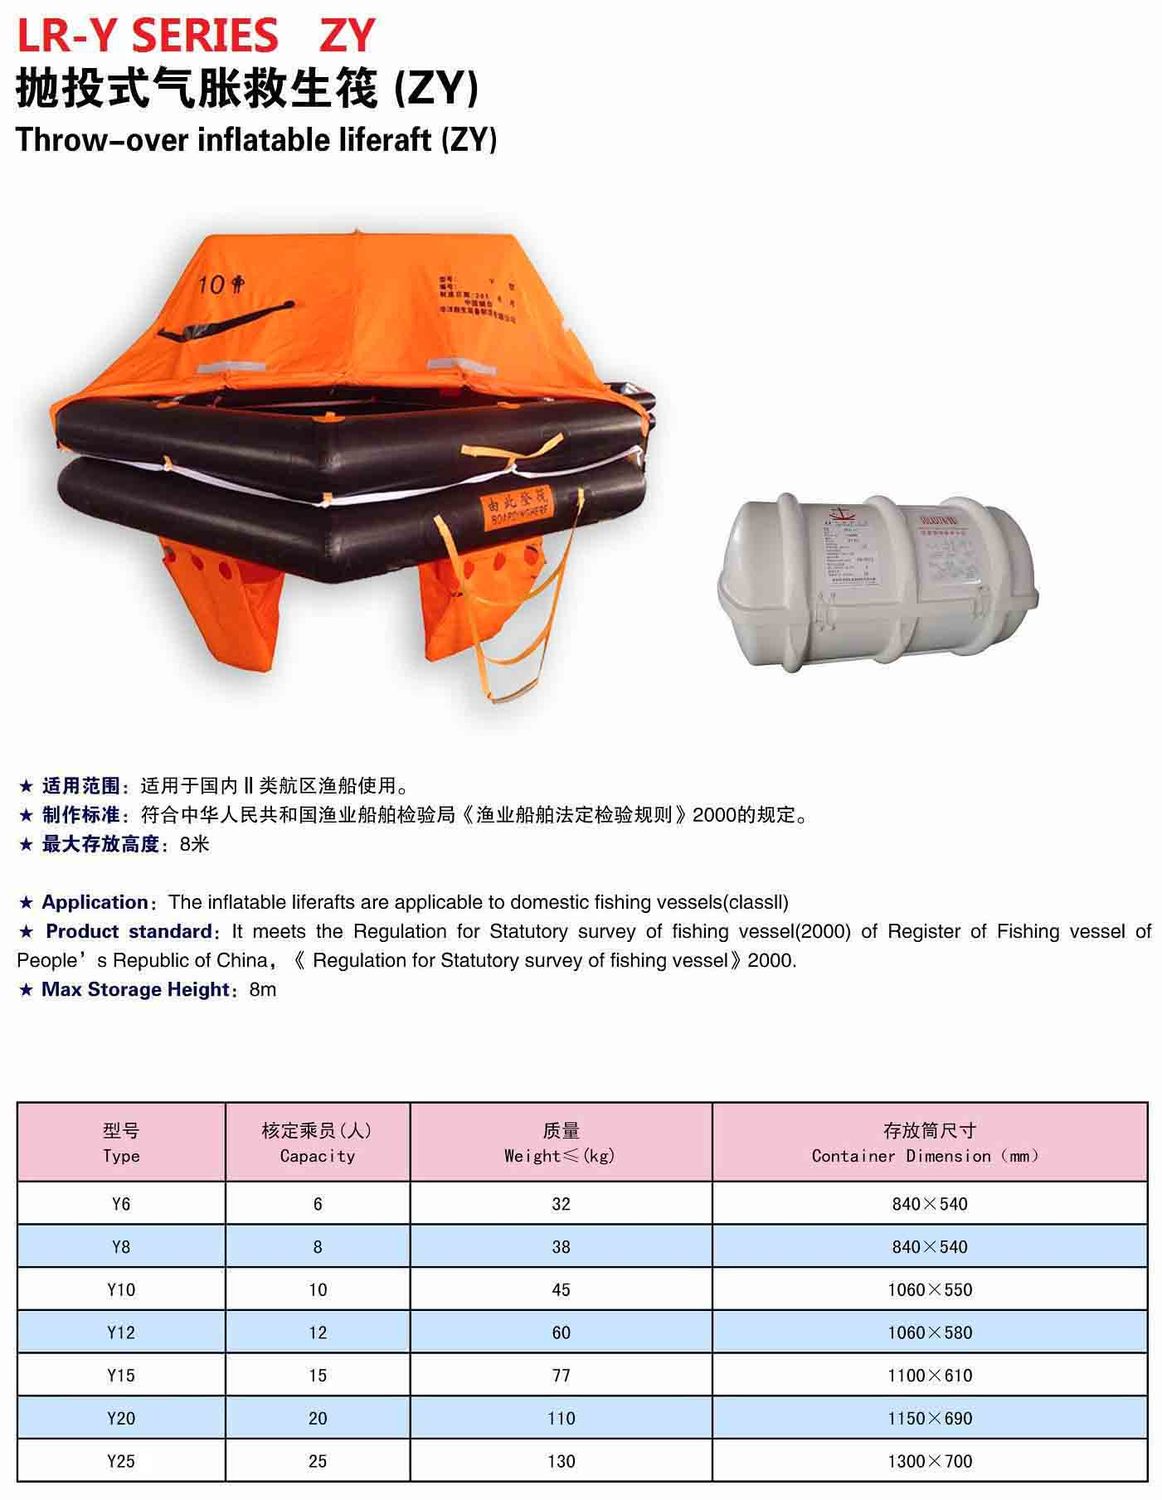 LR-Y Series Throw-overboard Fishing Vessels Inflatable Liferaft